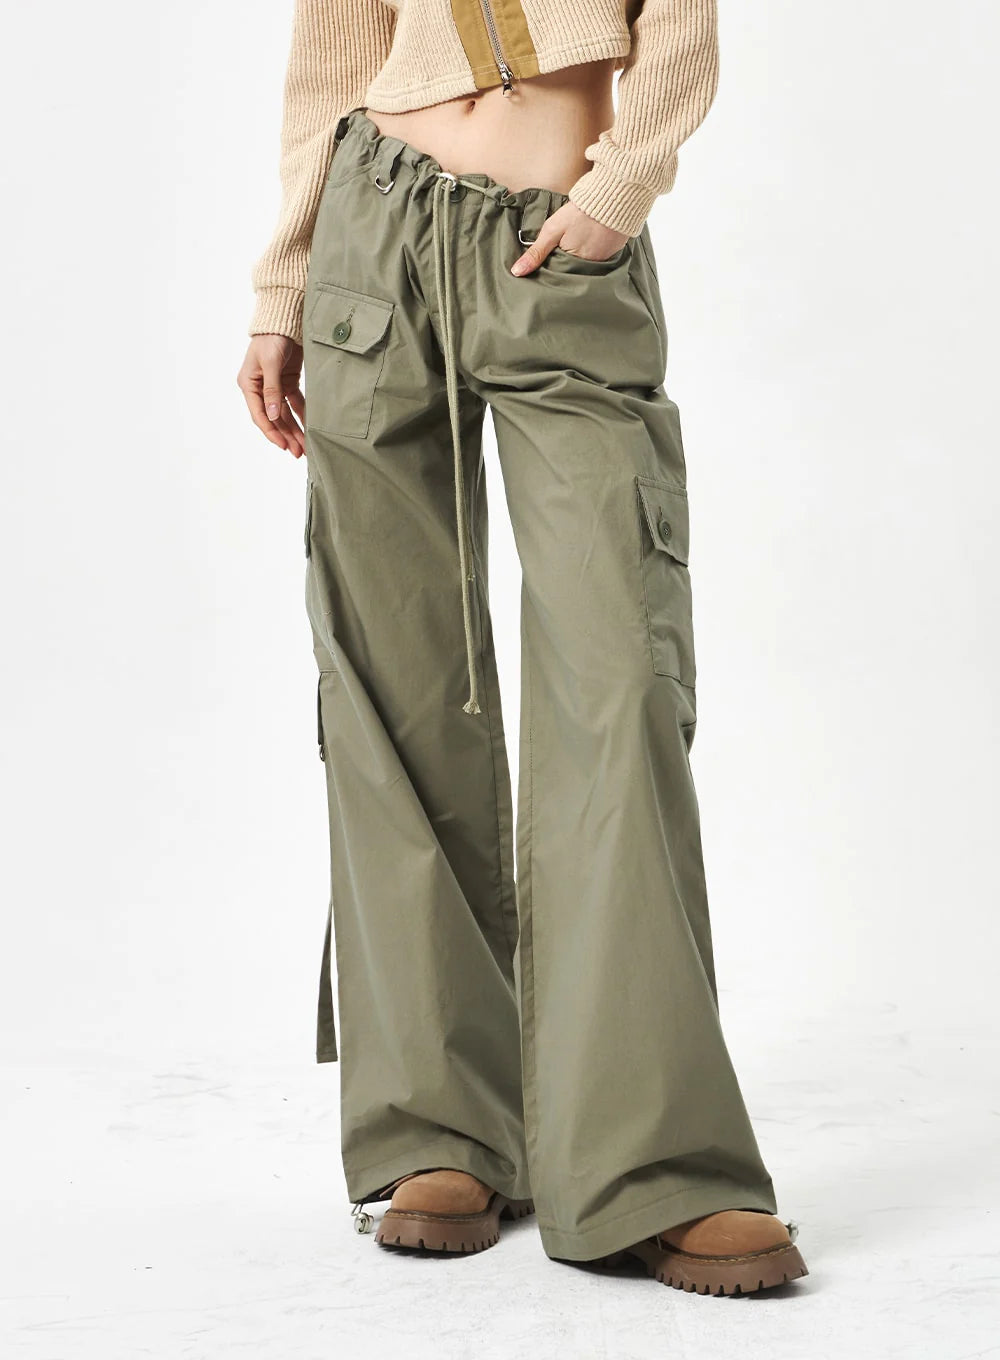 Parachute Pants - Dark khaki green - Ladies